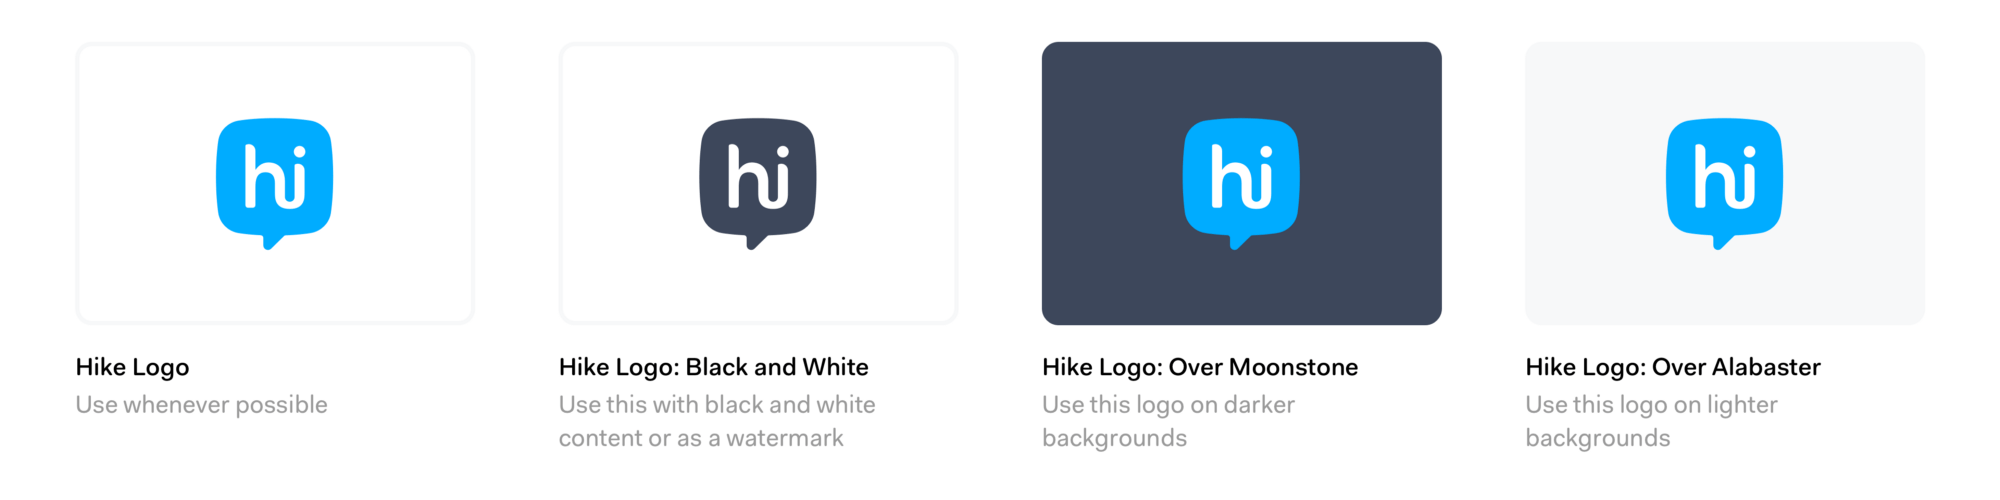 Hi Logo - Hike Logo Usage Guidelines – The Hike Press Blog